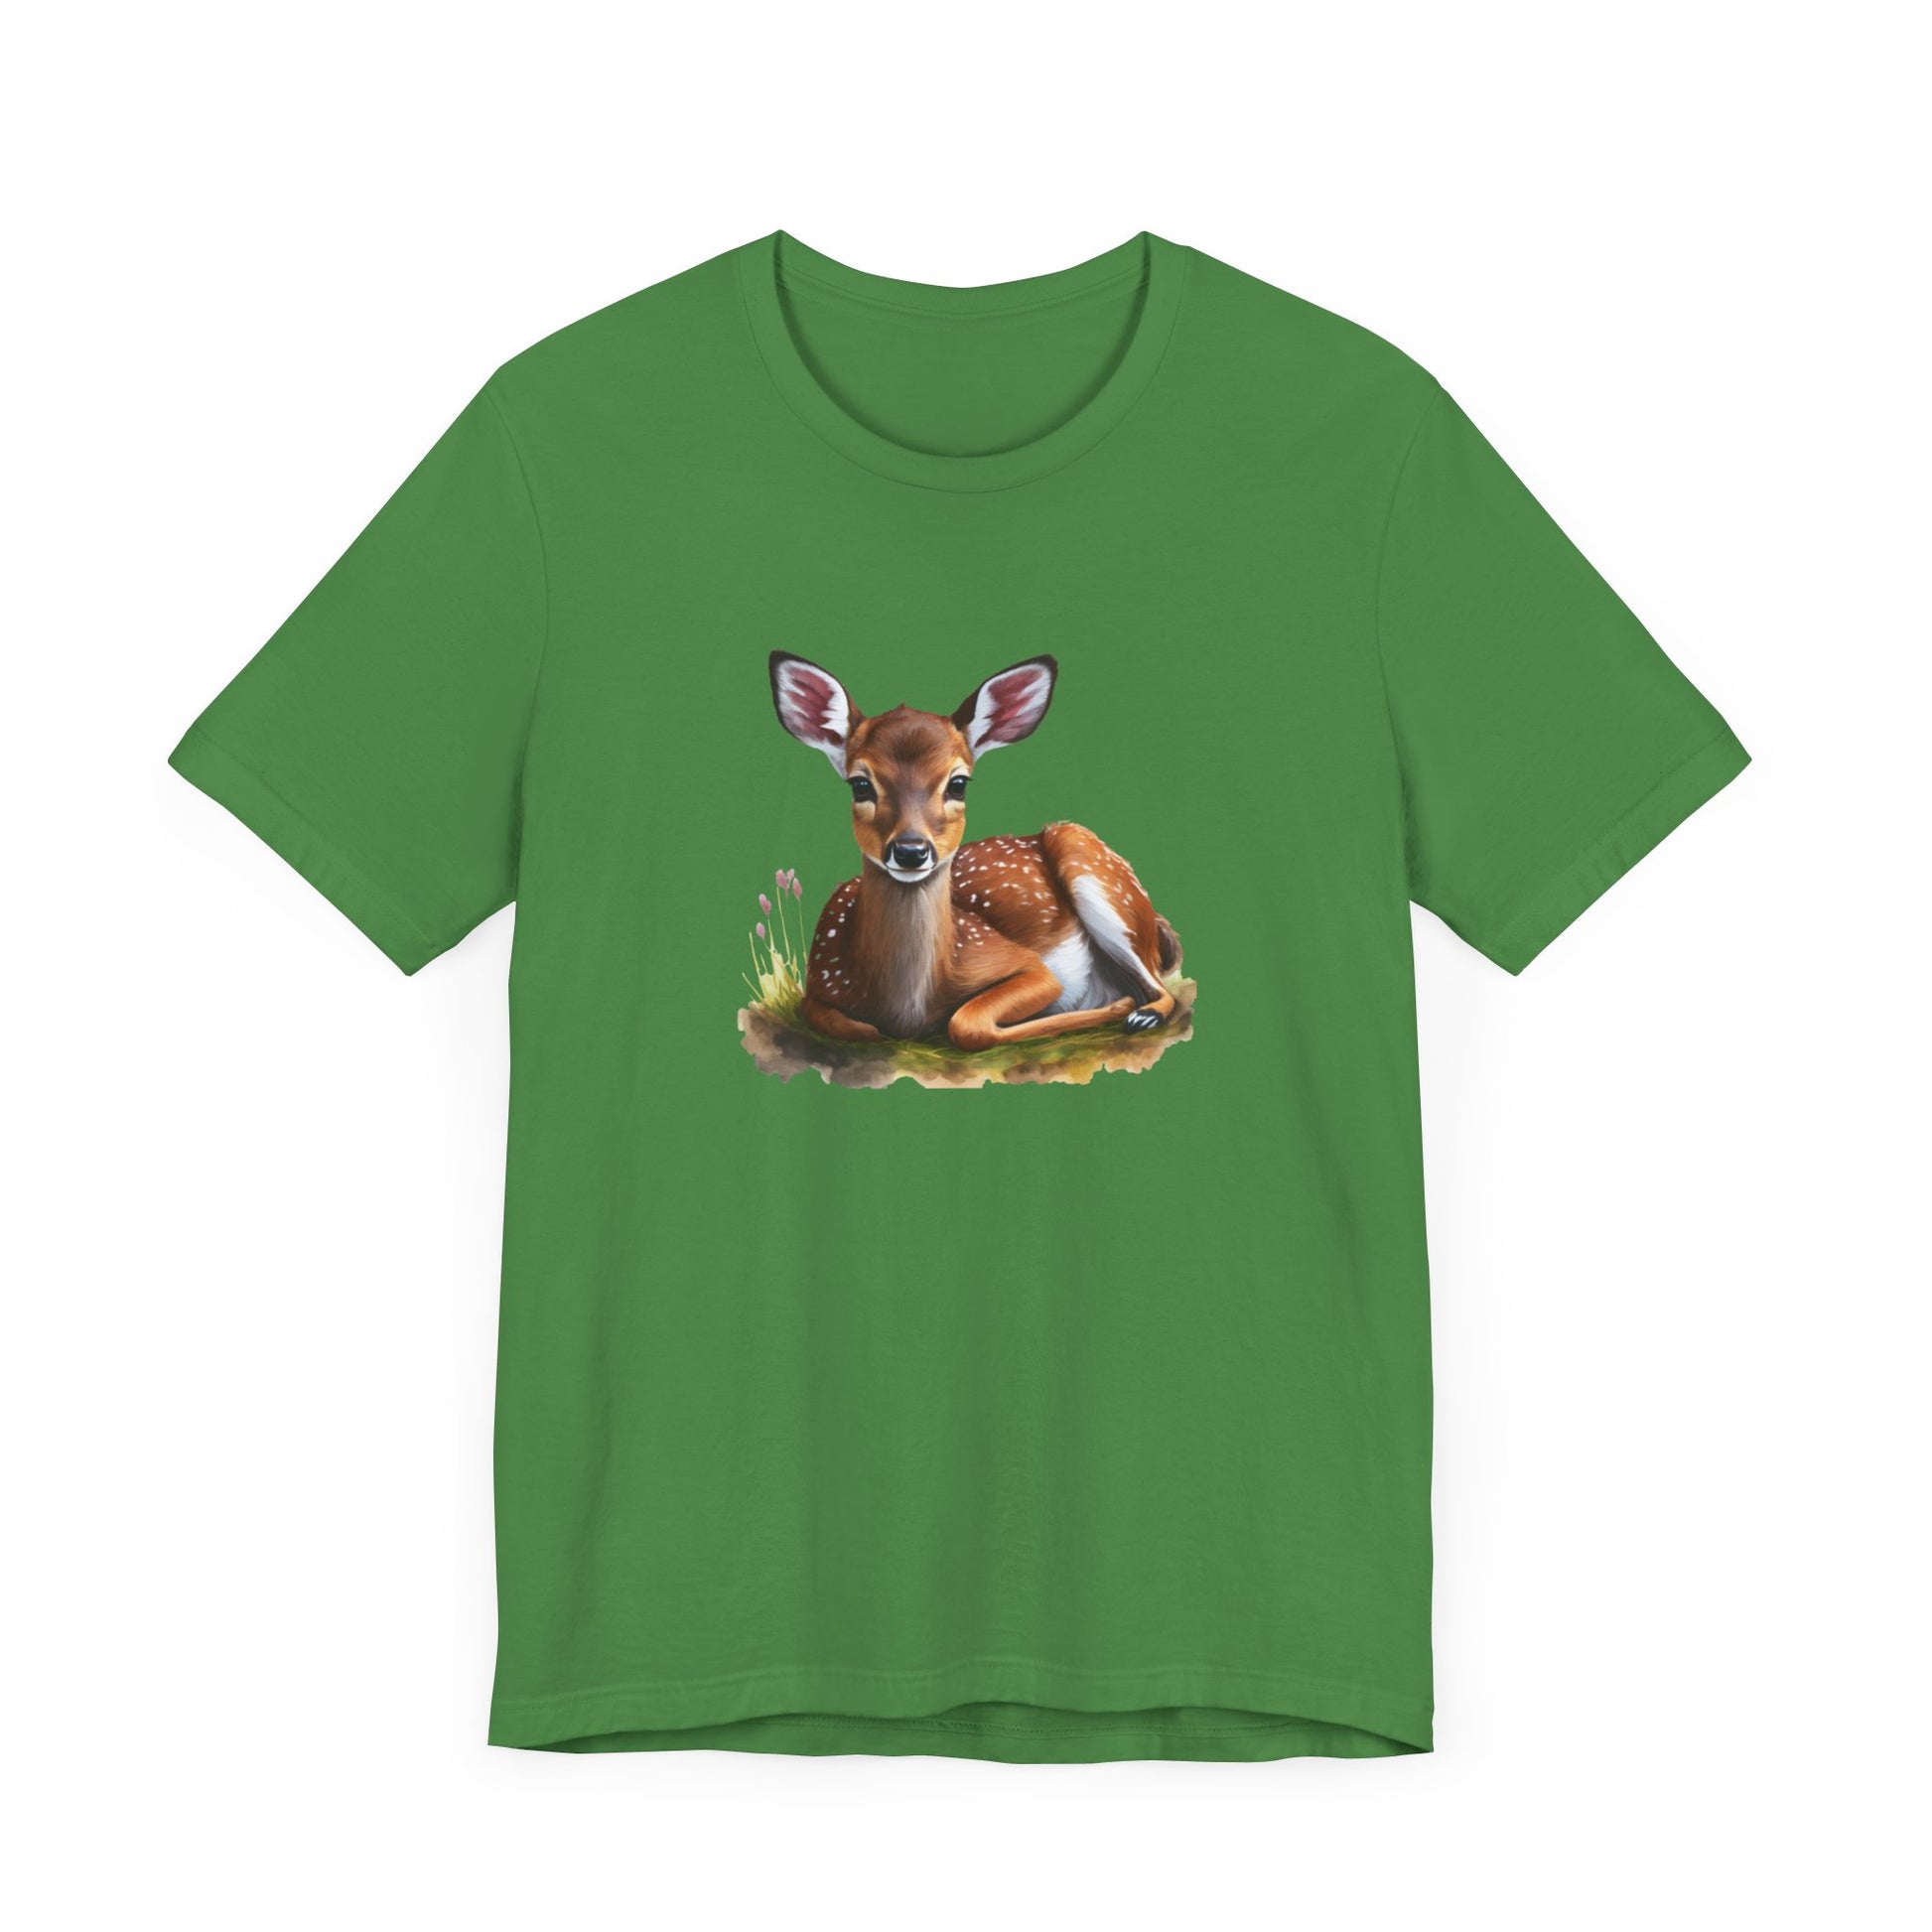 Deer Kind-Hearted Graphic T-shirt - Tortuna